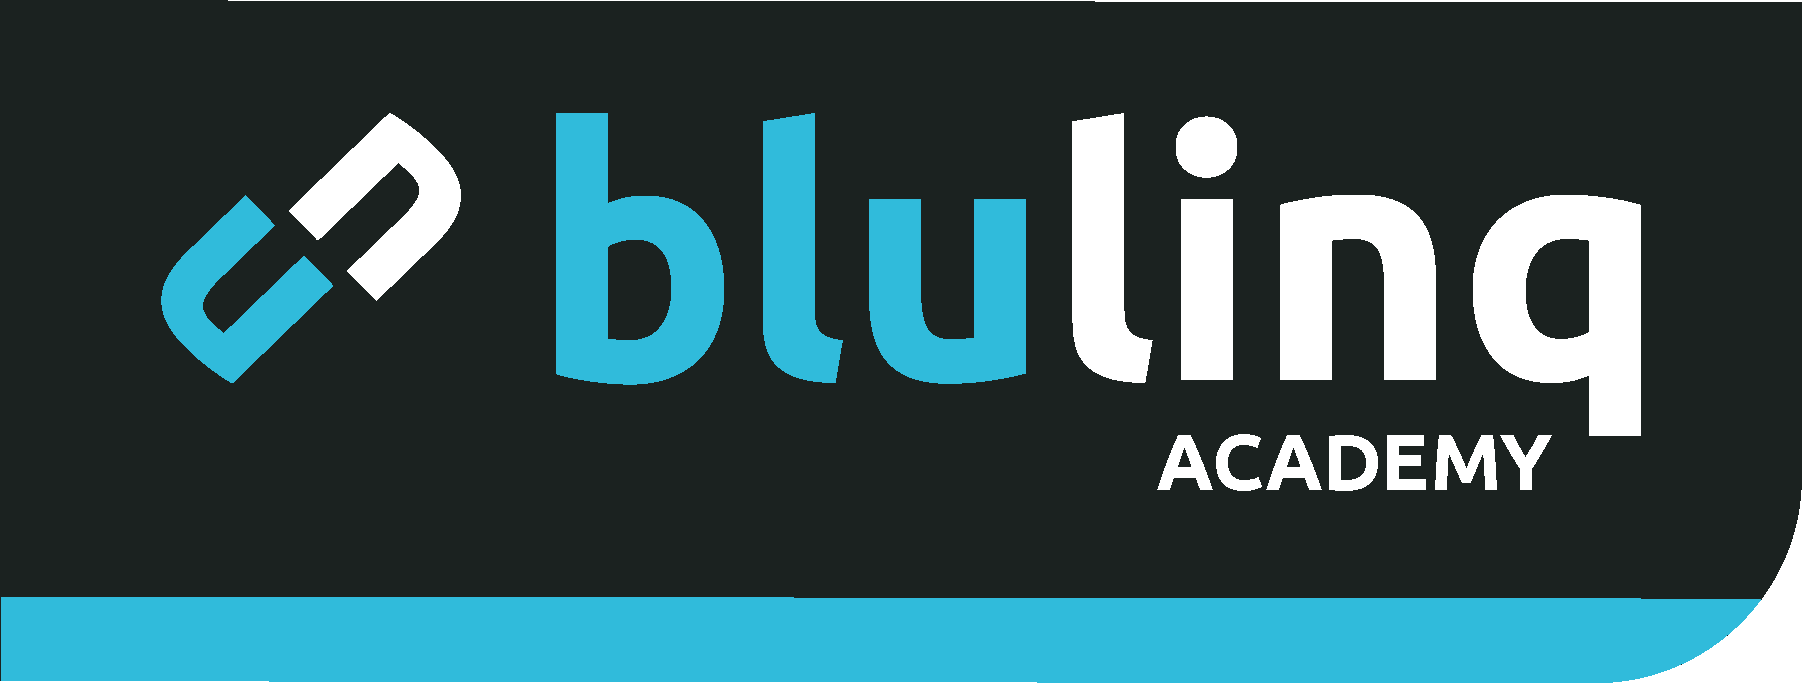 Blulinq_academy